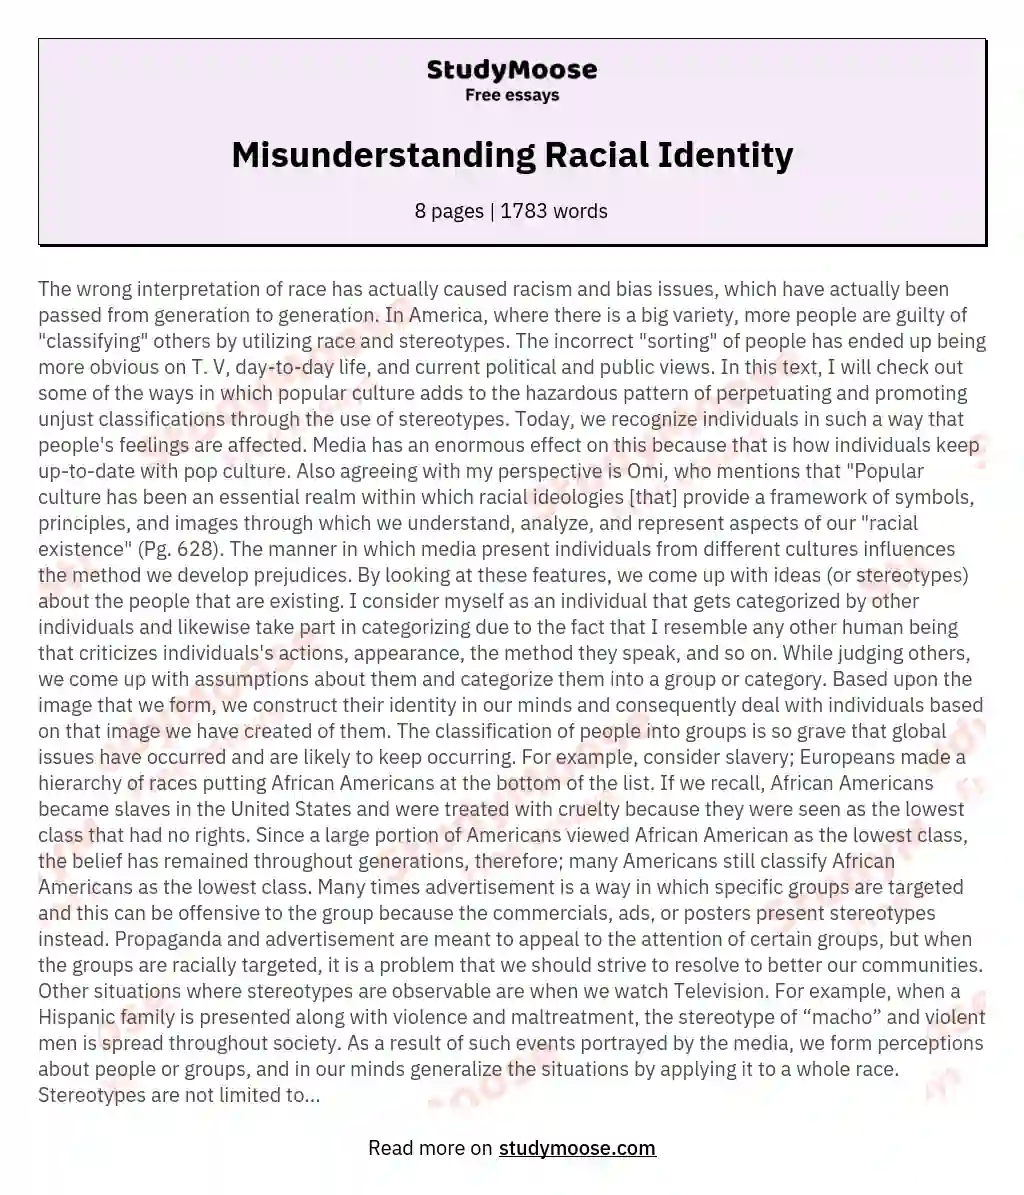 Misunderstanding Racial Identity essay